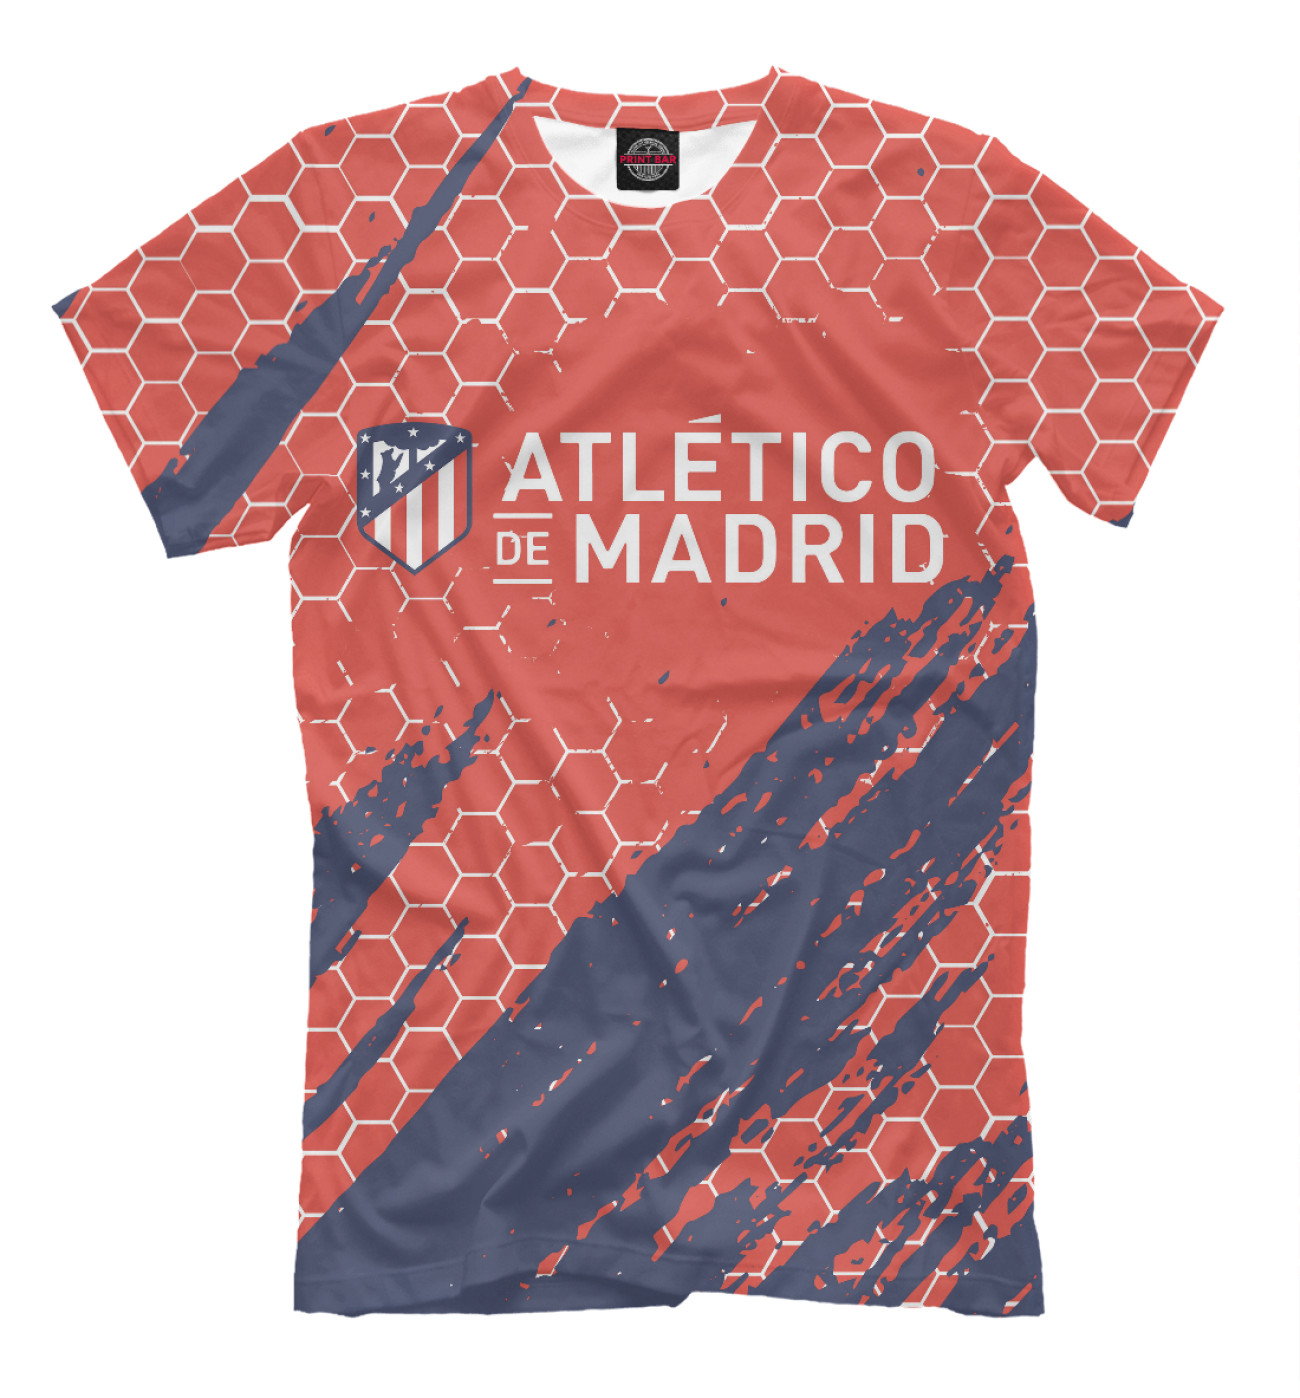 Мужская Футболка Atletico Madrid, артикул: ATL-992771-fut-2